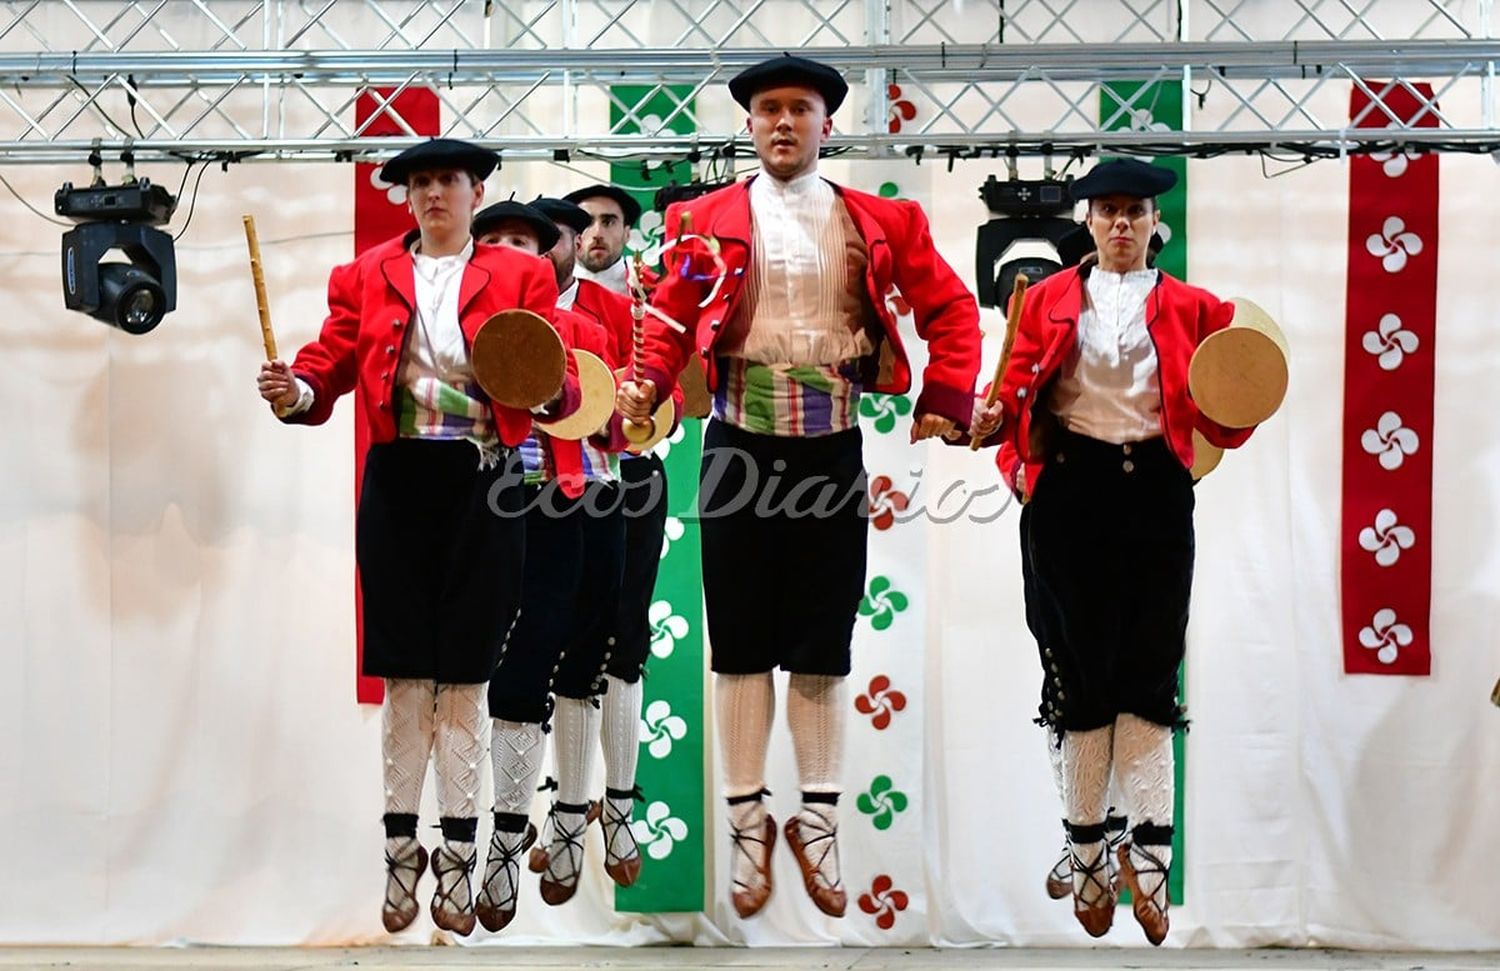 Lucida actuación del grupo de danzas vascas “Goizaldi”